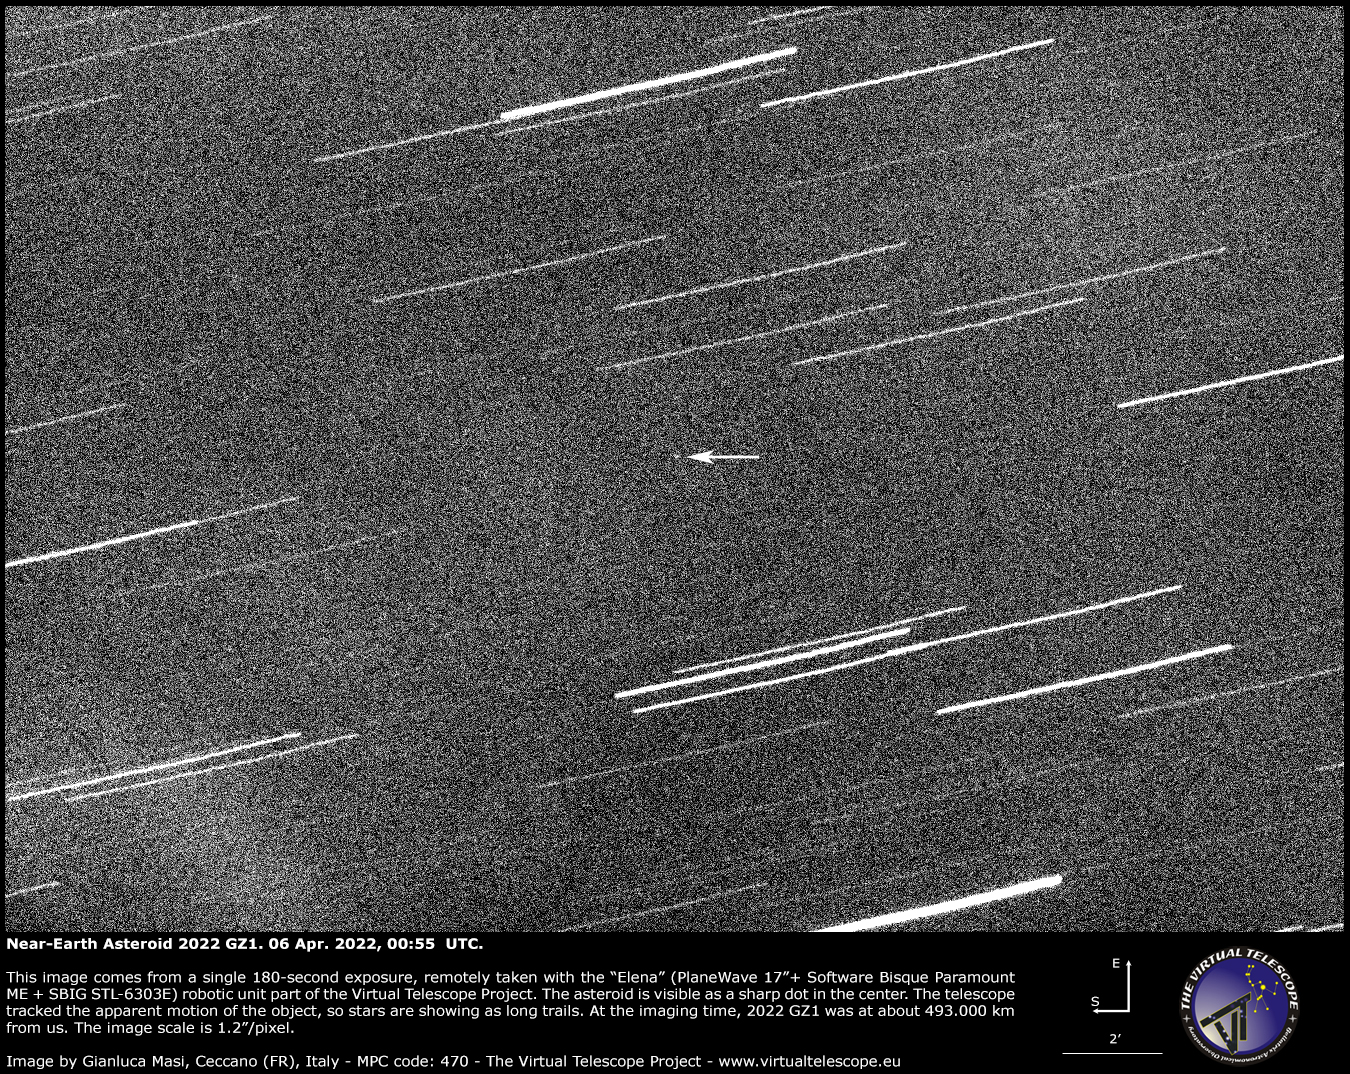 Near-Earth Asteroid 2022 GZ1: 5 Apr. 2022.